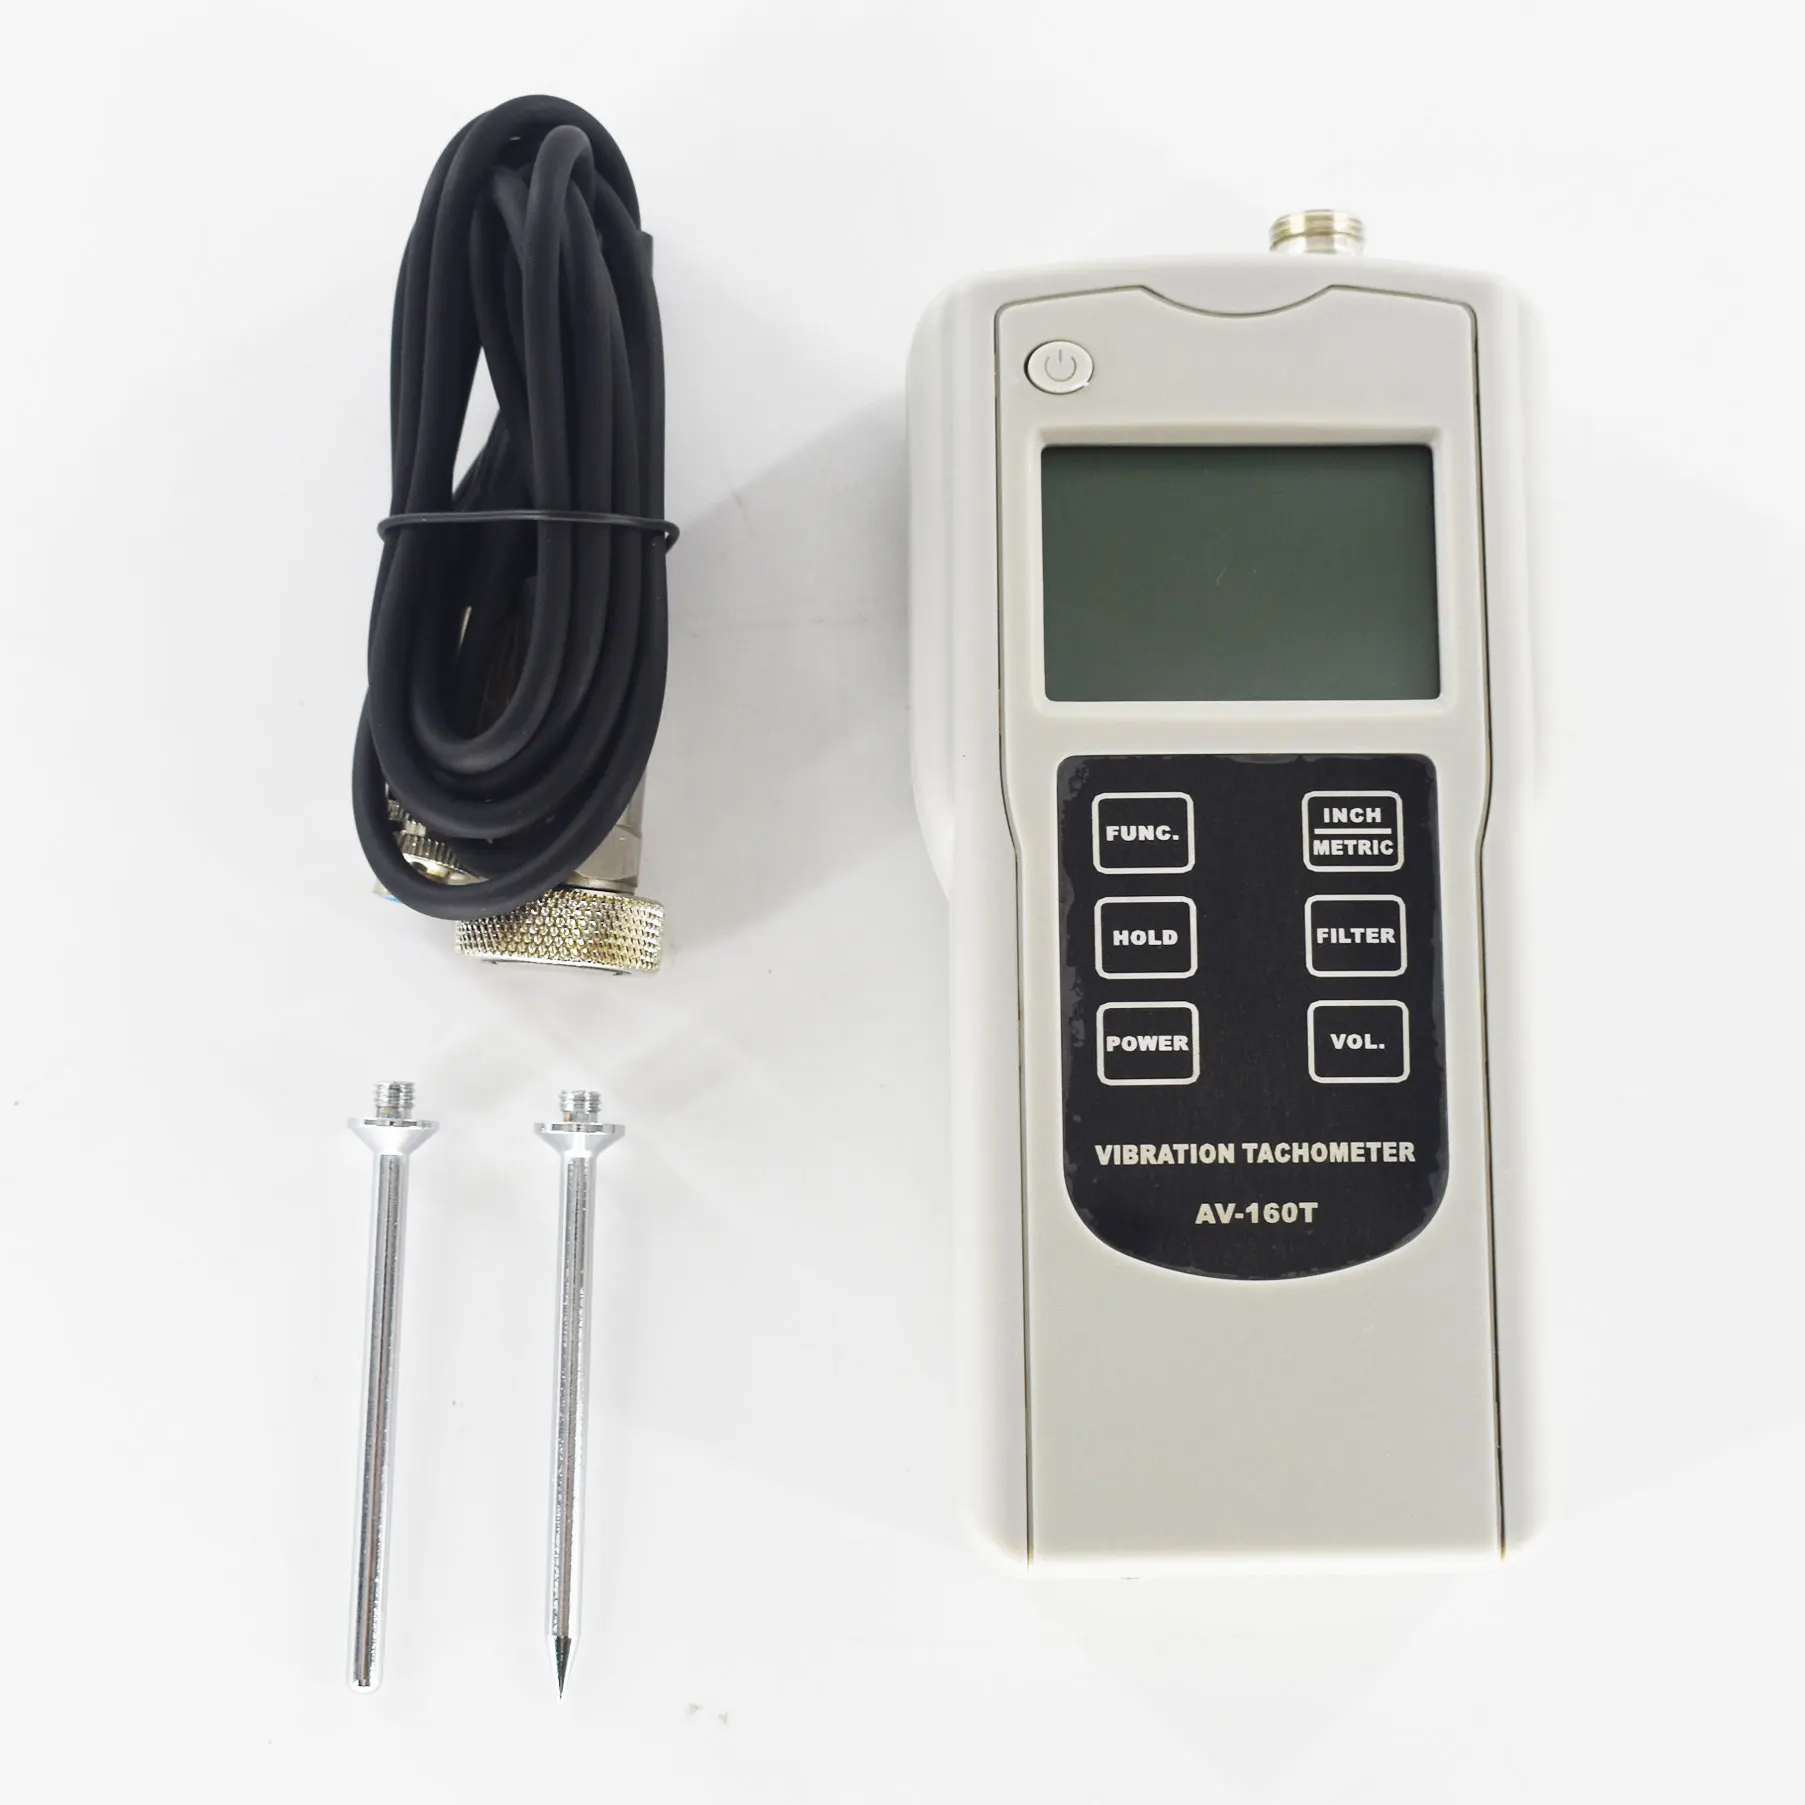 

Portable Digital Vibration Tachometer Vibration Meter AV-160T Can Measure Rotation rate RPM(r/min) & Frequency Hz